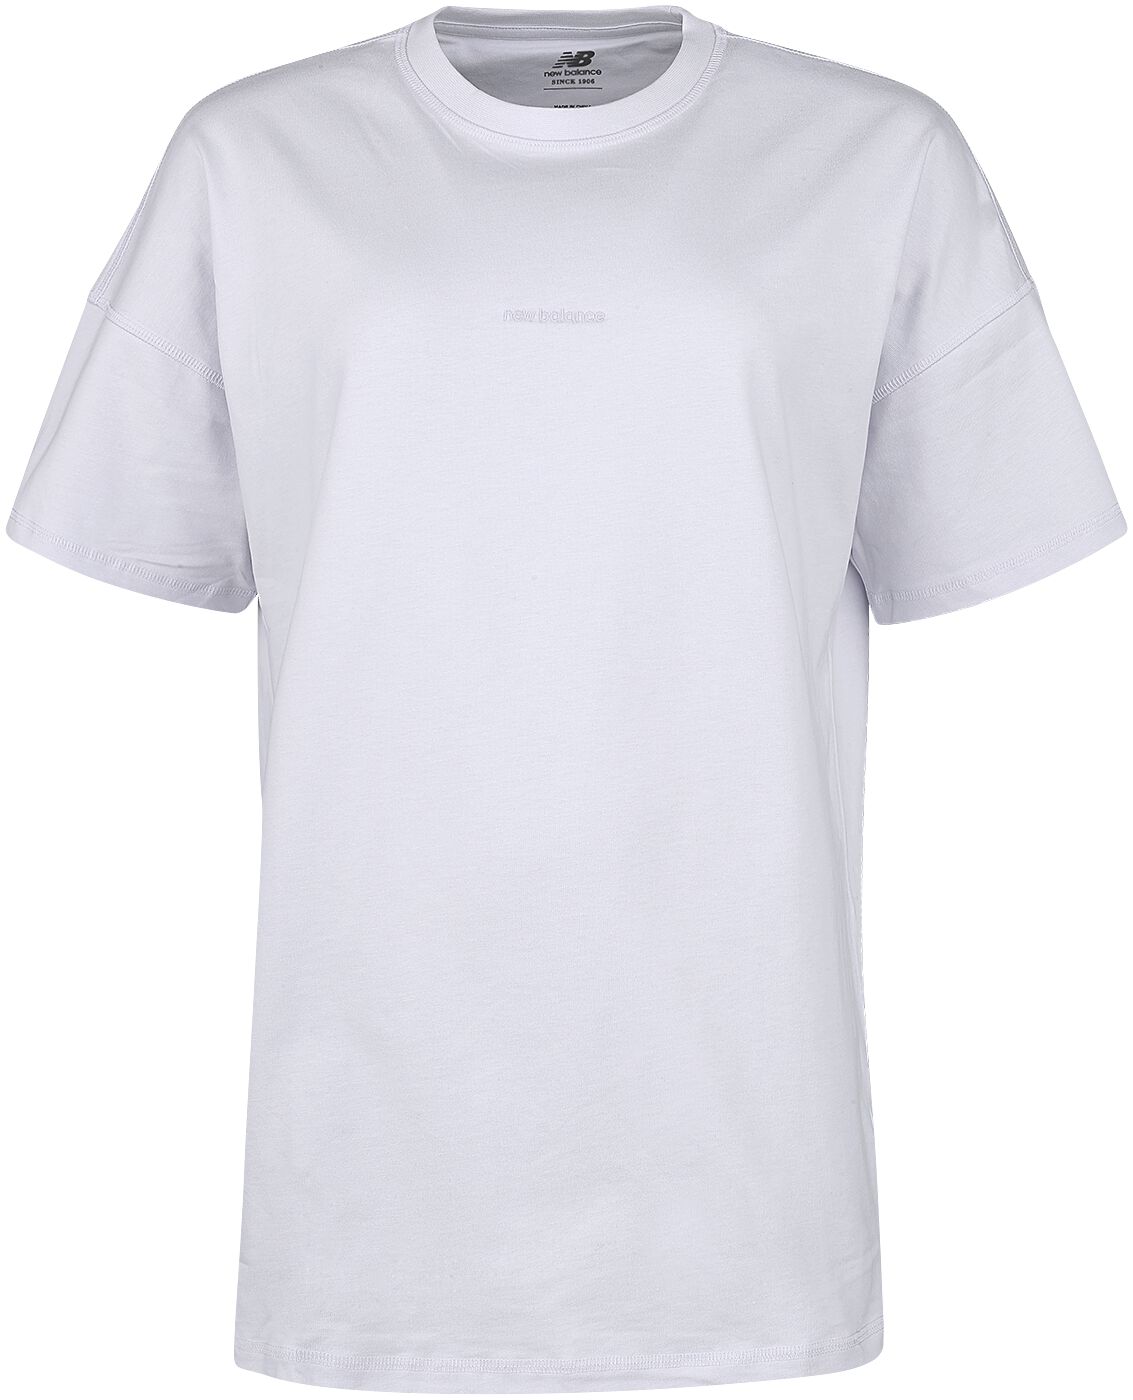 Image of T-Shirt di New Balance - NB Athletics Nature State short-sleeved t-shirt - XS a XL - Donna - lilla